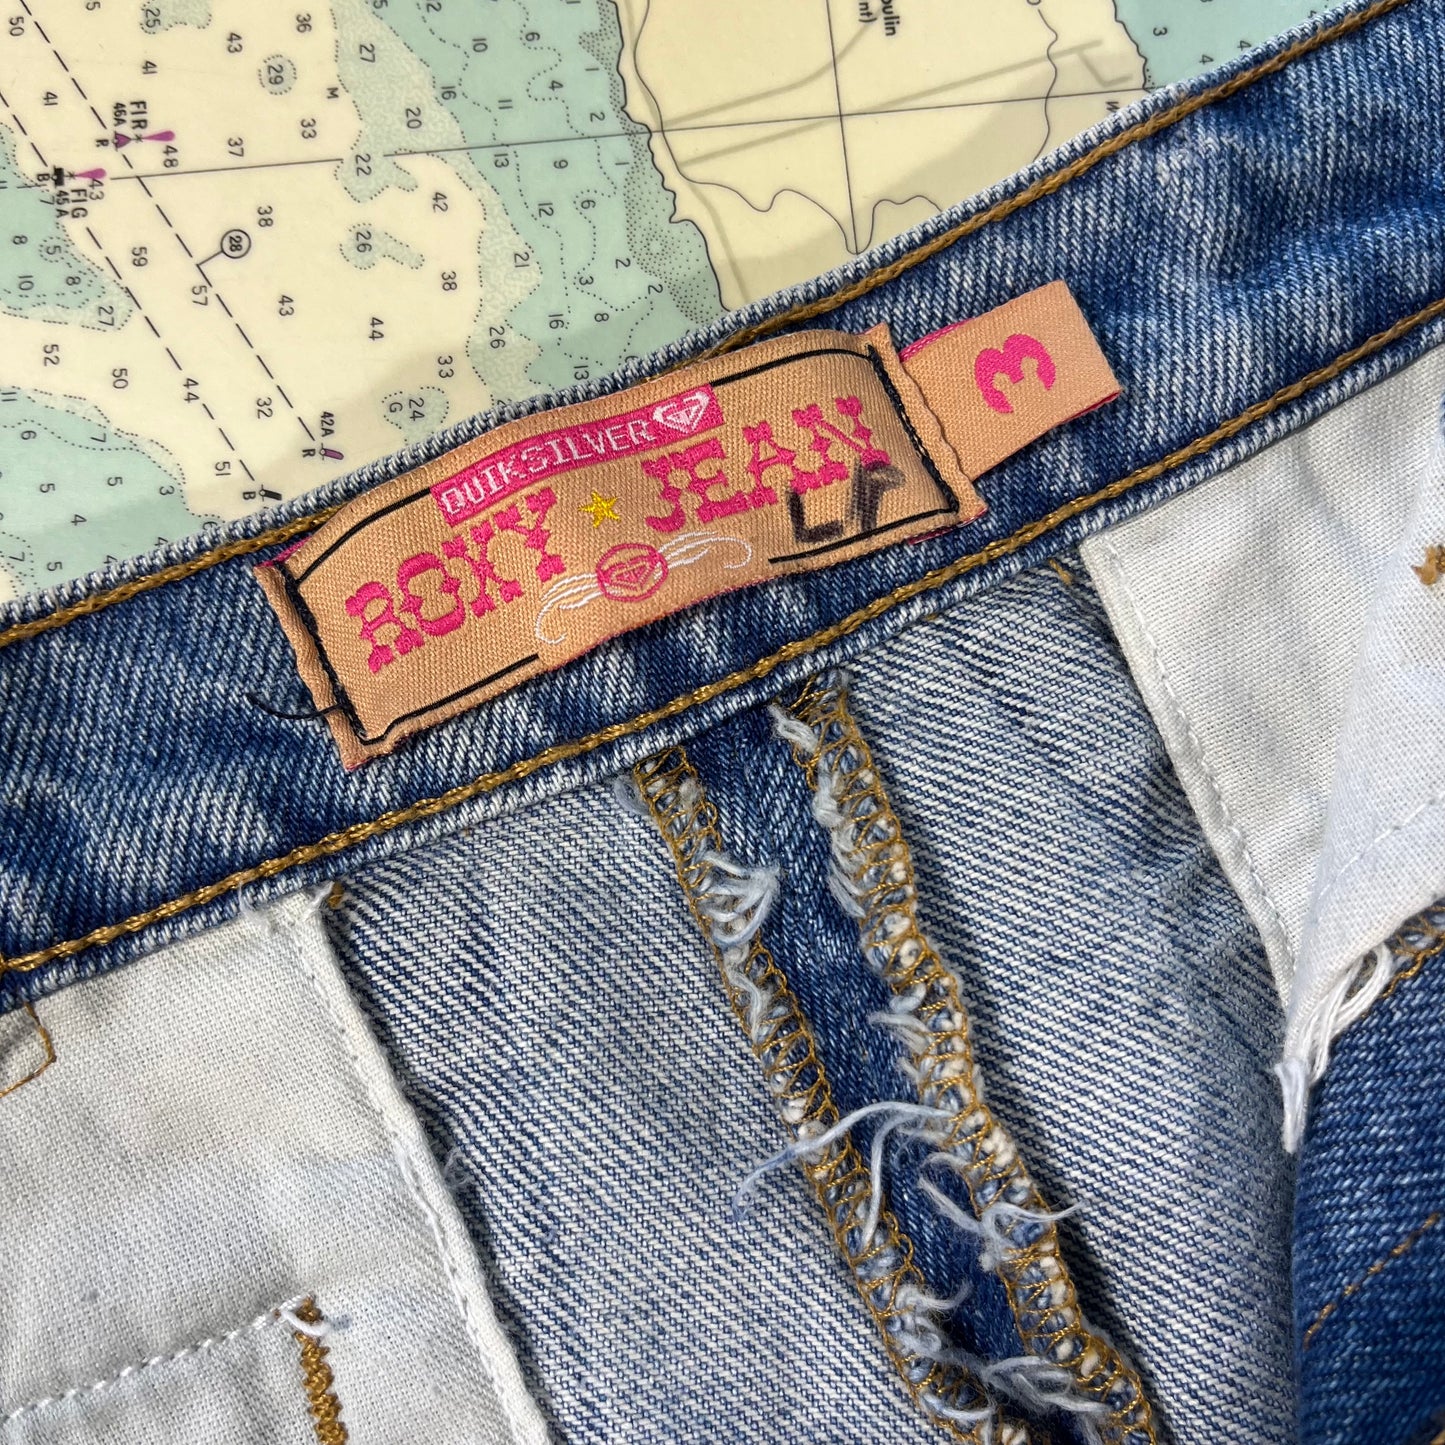 Vintage Roxy Jean / Quiksilver Denim Skirt